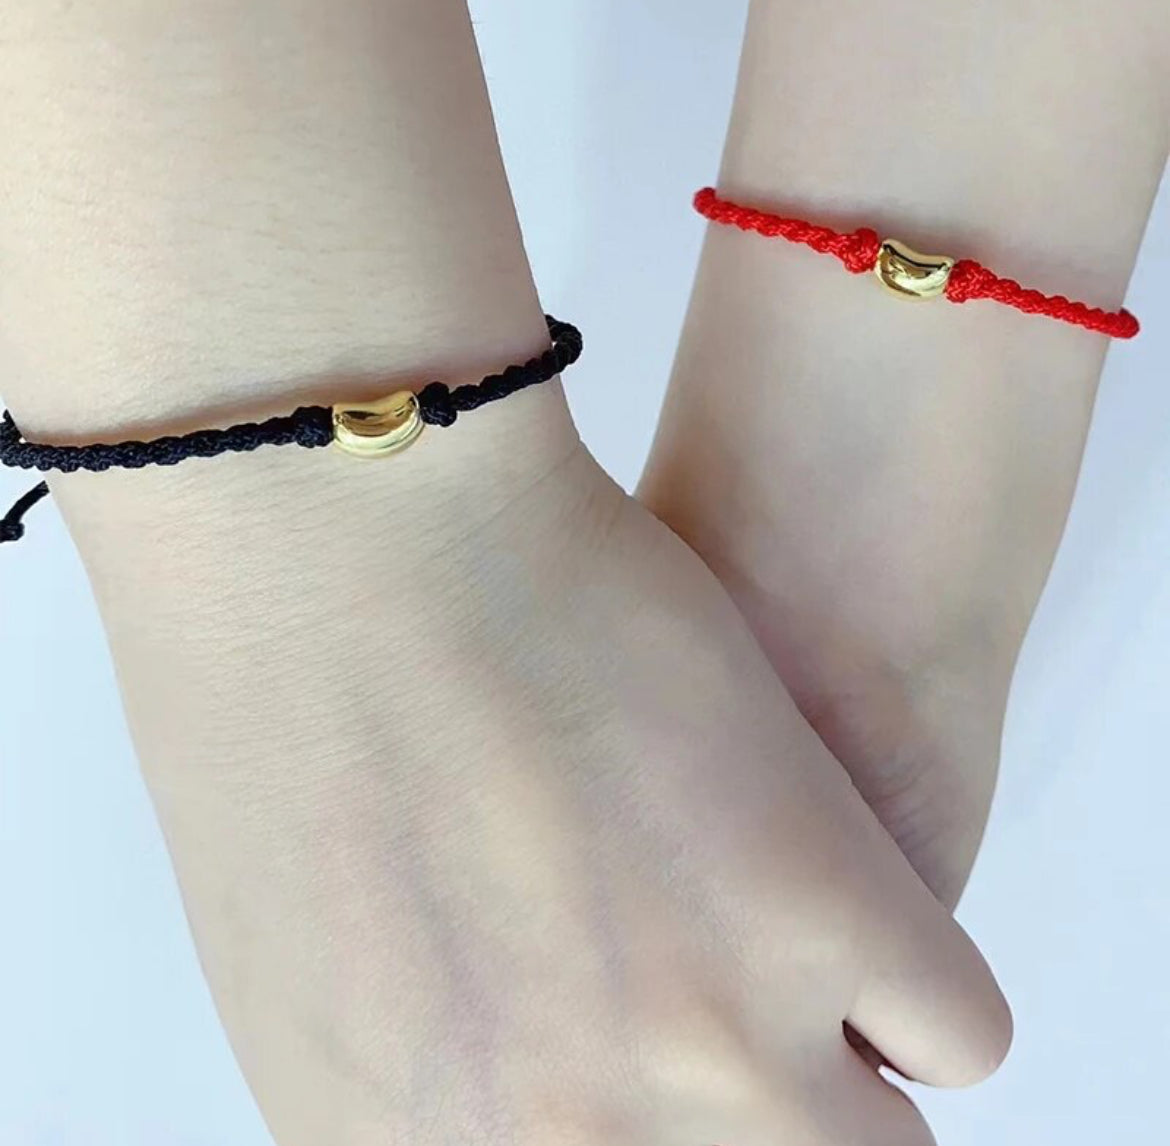 Matching String Bracelets with 18k Gold